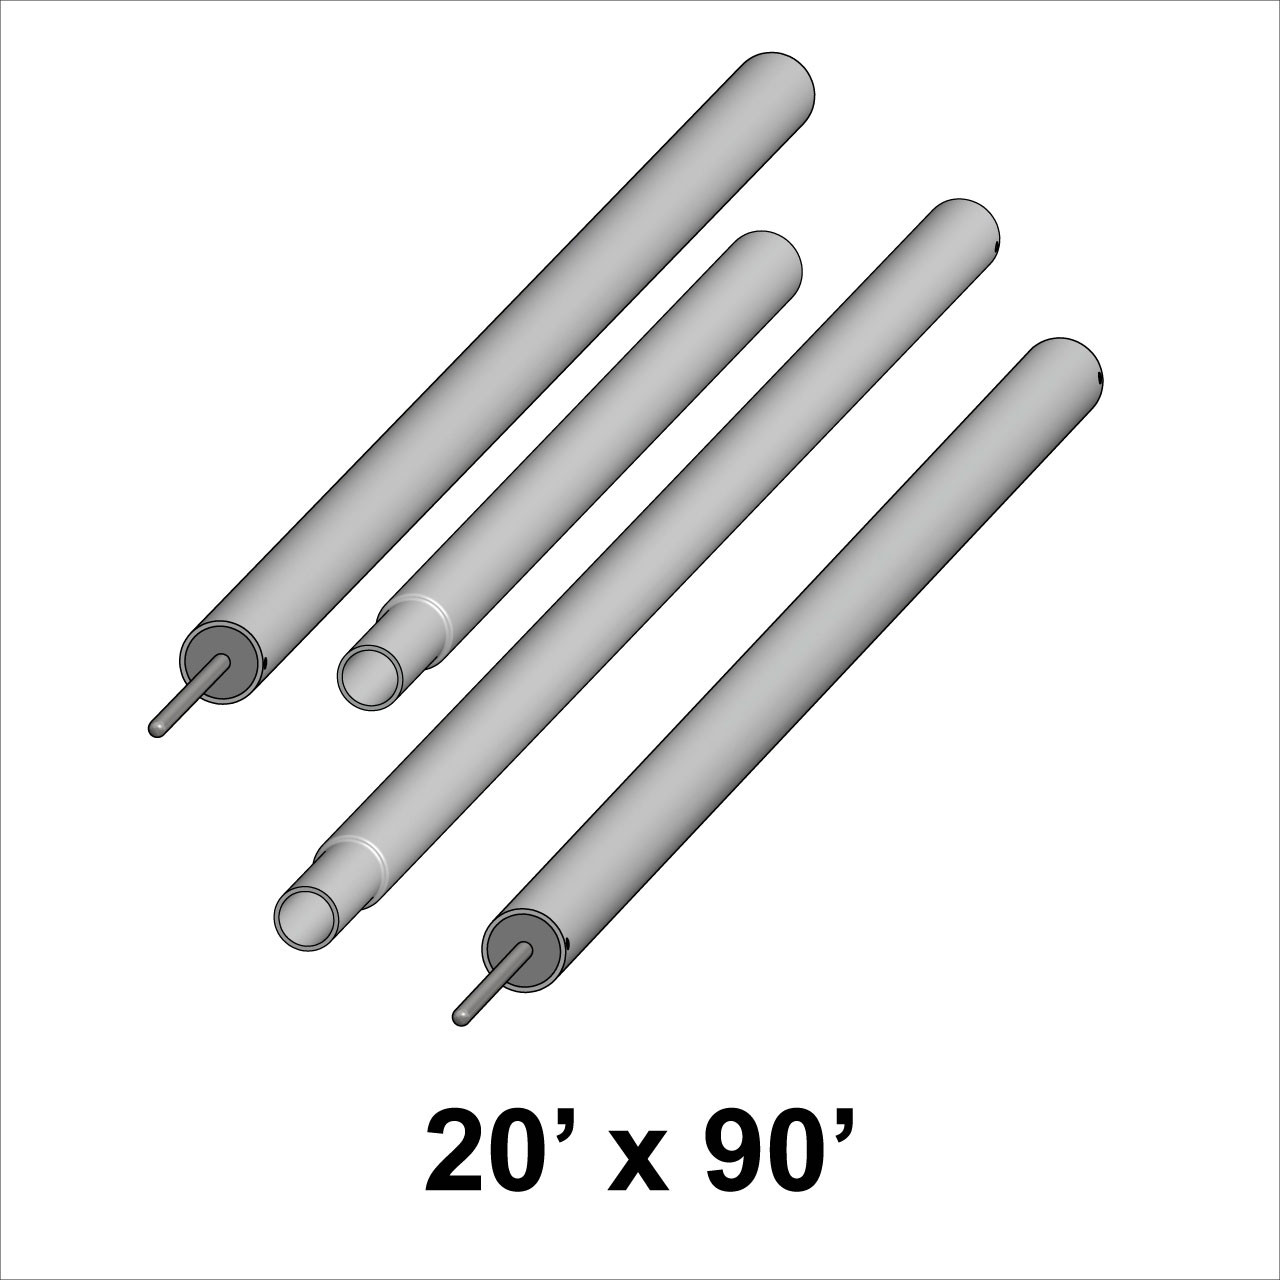 20' x 90' Classic Series Pole Kit